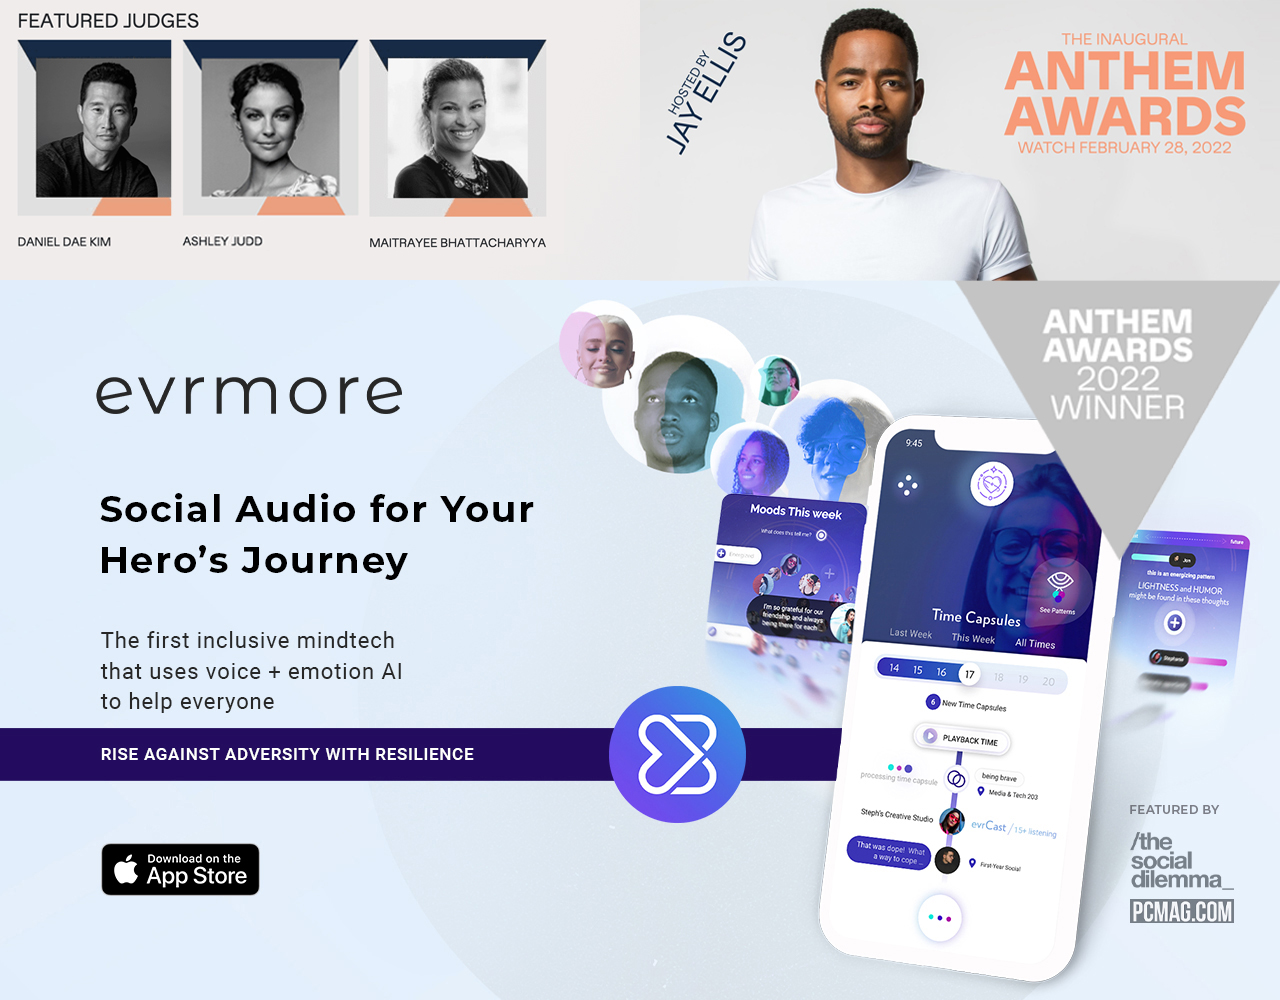 evrmore wins Best Responsible Technology by Anthem Awards 2022